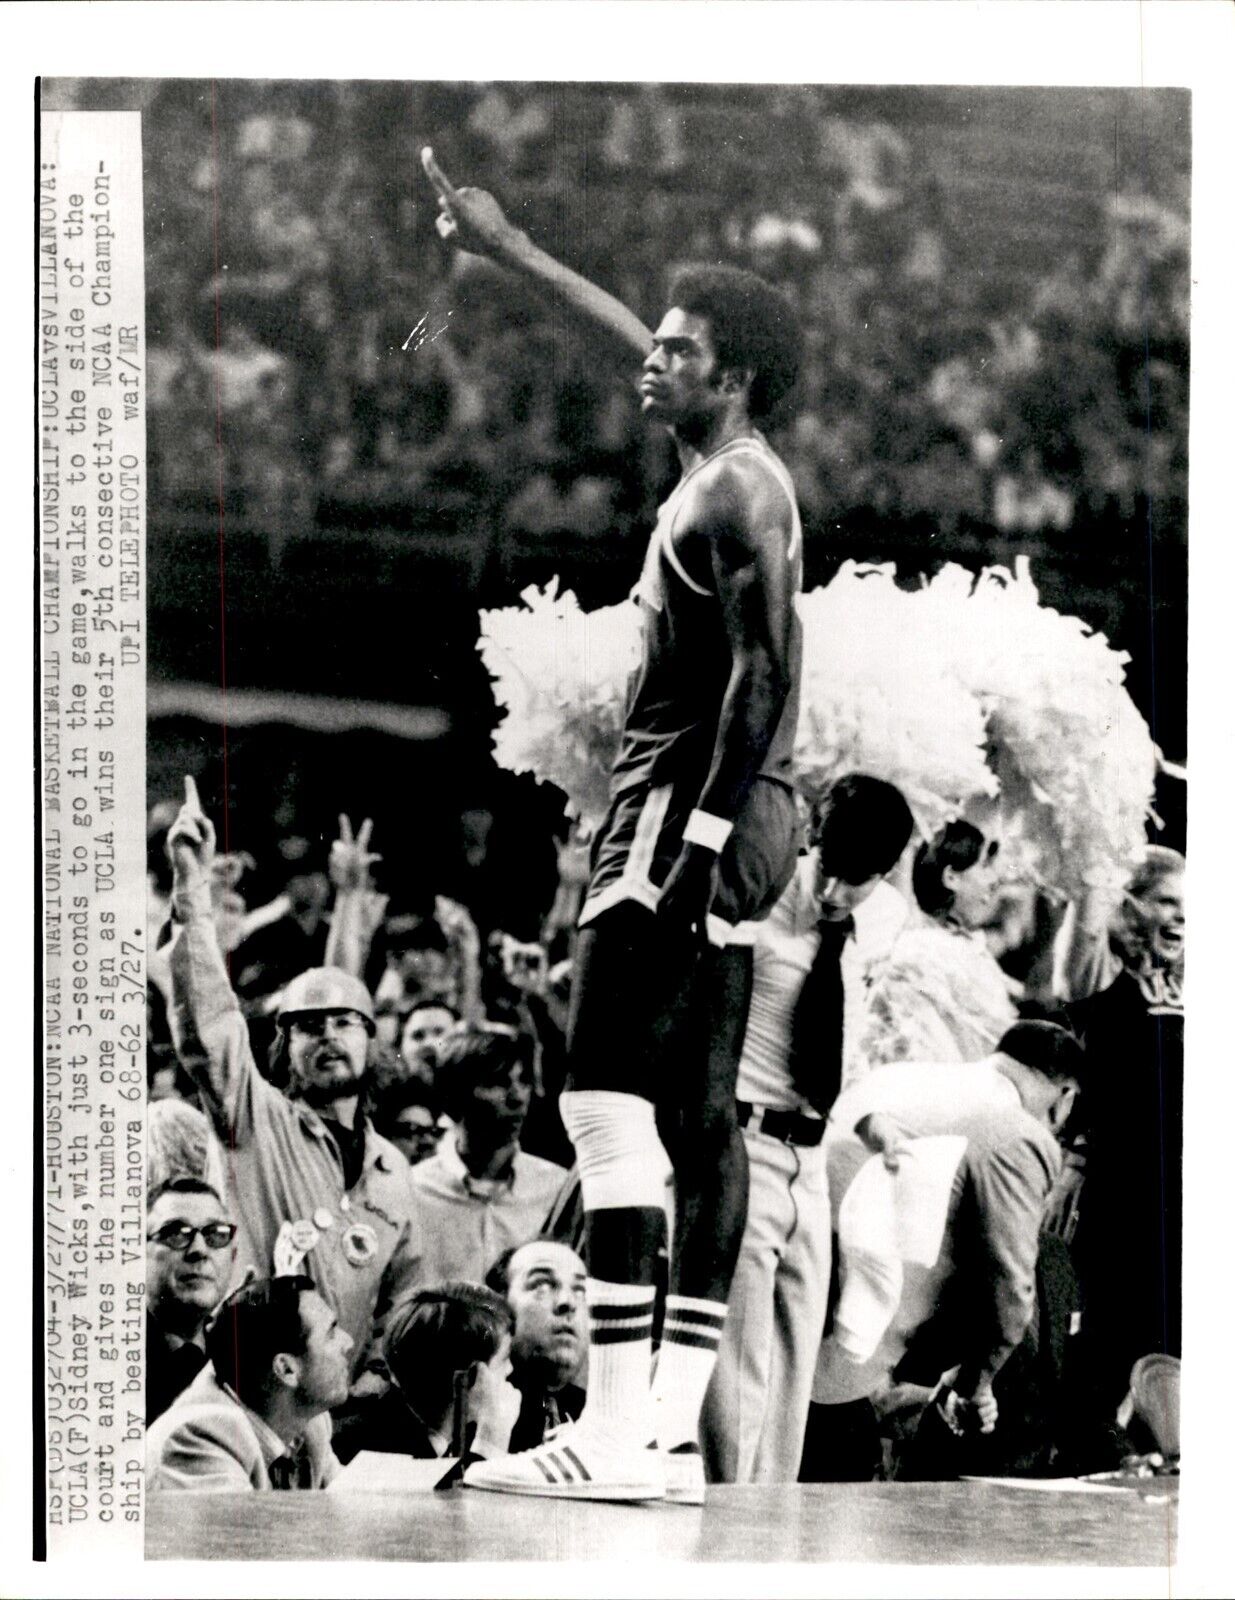 LD328 1971 Wire Photo SIDNEY WICKS UCLA BRUINS vs VILLANOVA WILDCATS BASKETBALL